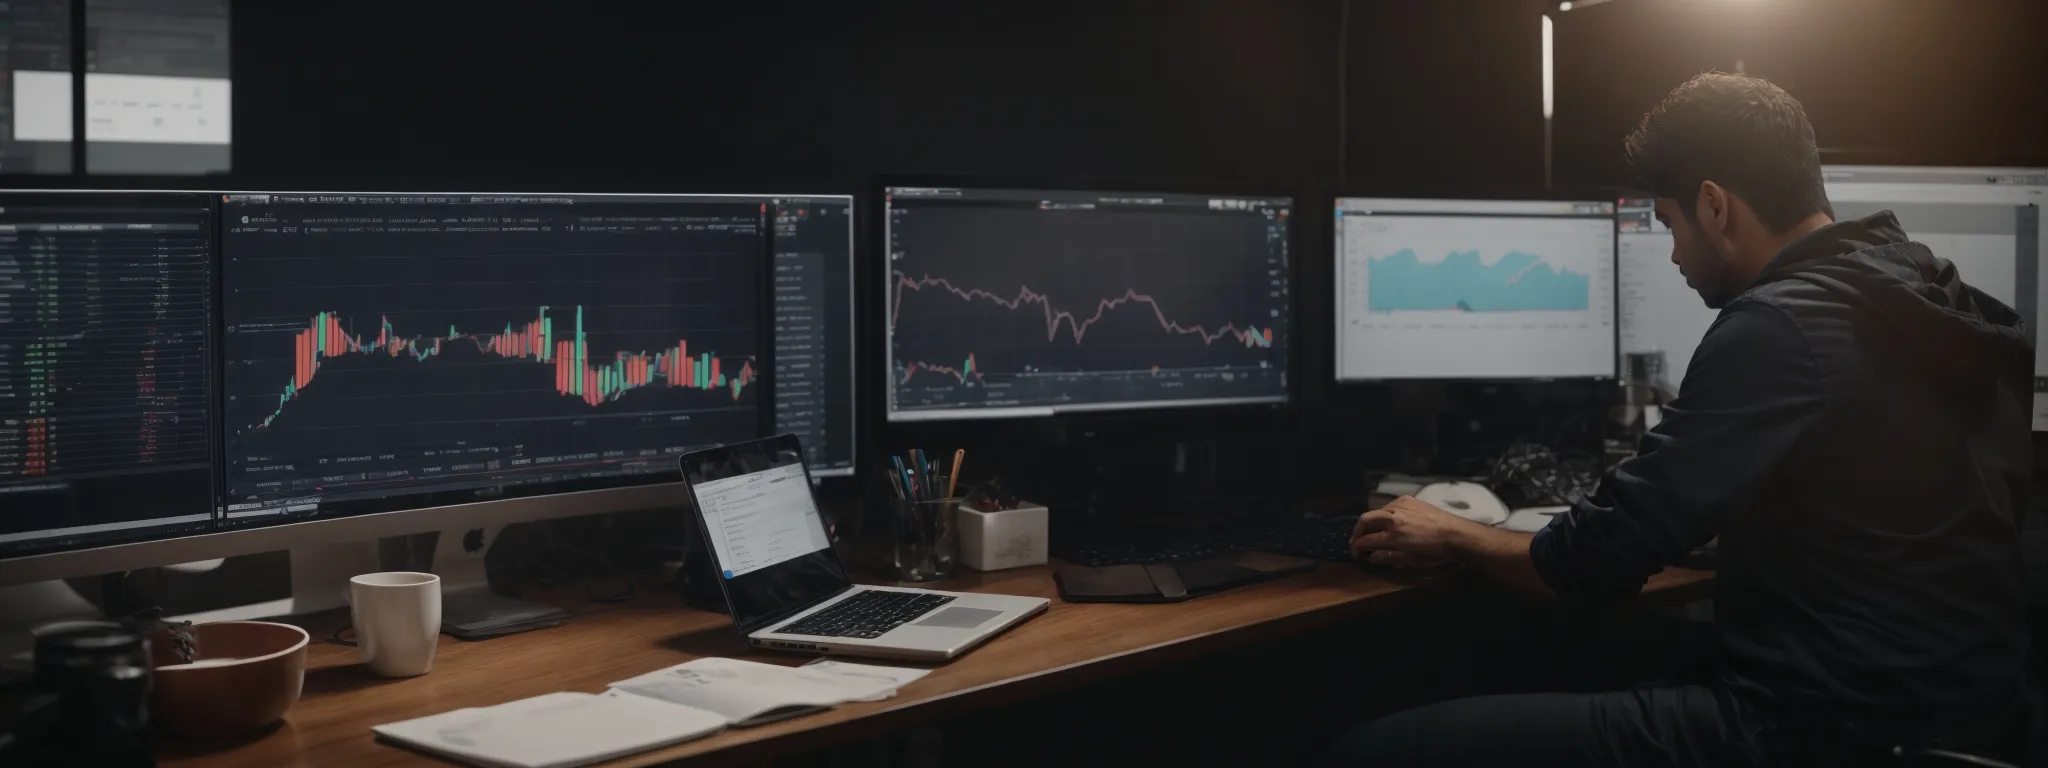 a digital marketing team analyzes graphs on a computer displaying google ads performance metrics.